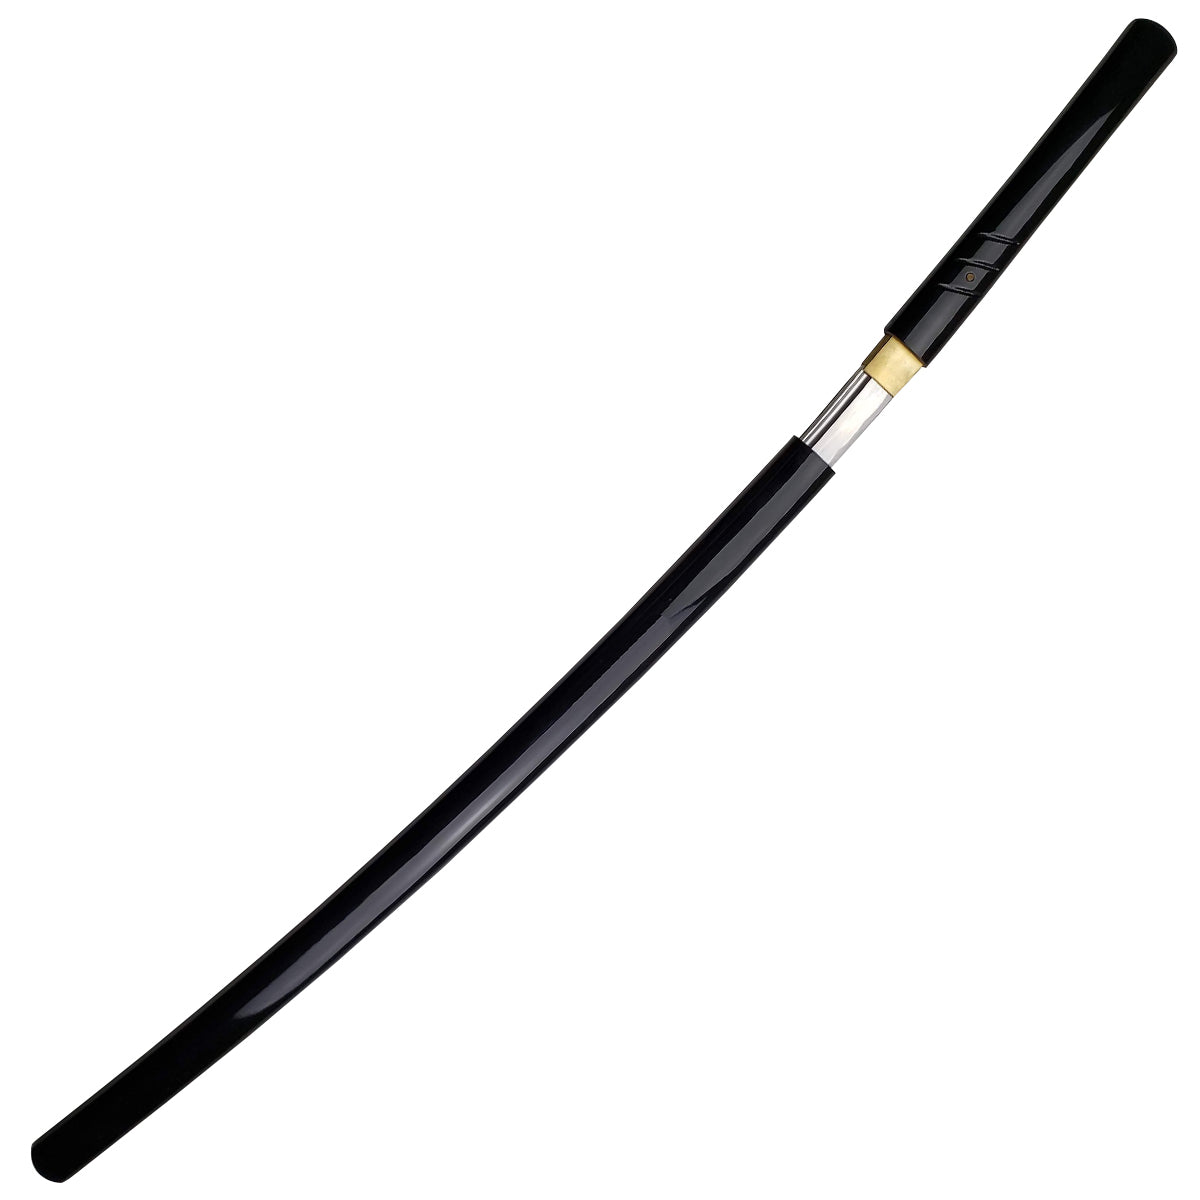 Musha Black Shirasaya - Authentic Samurai Swords for Sale Online.